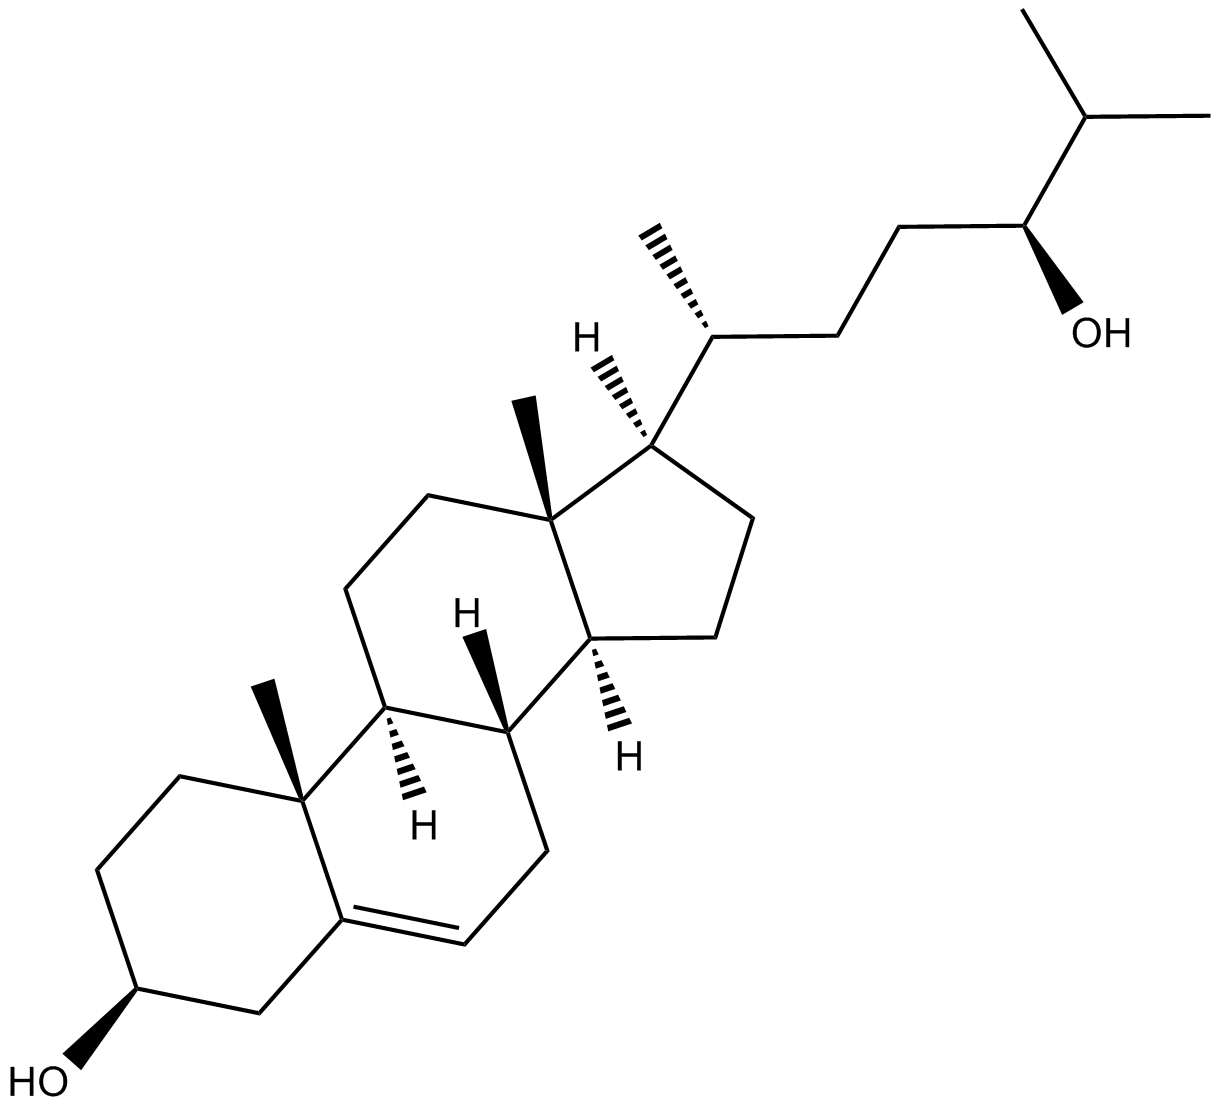 24(S)-hydroxy Cholesterol